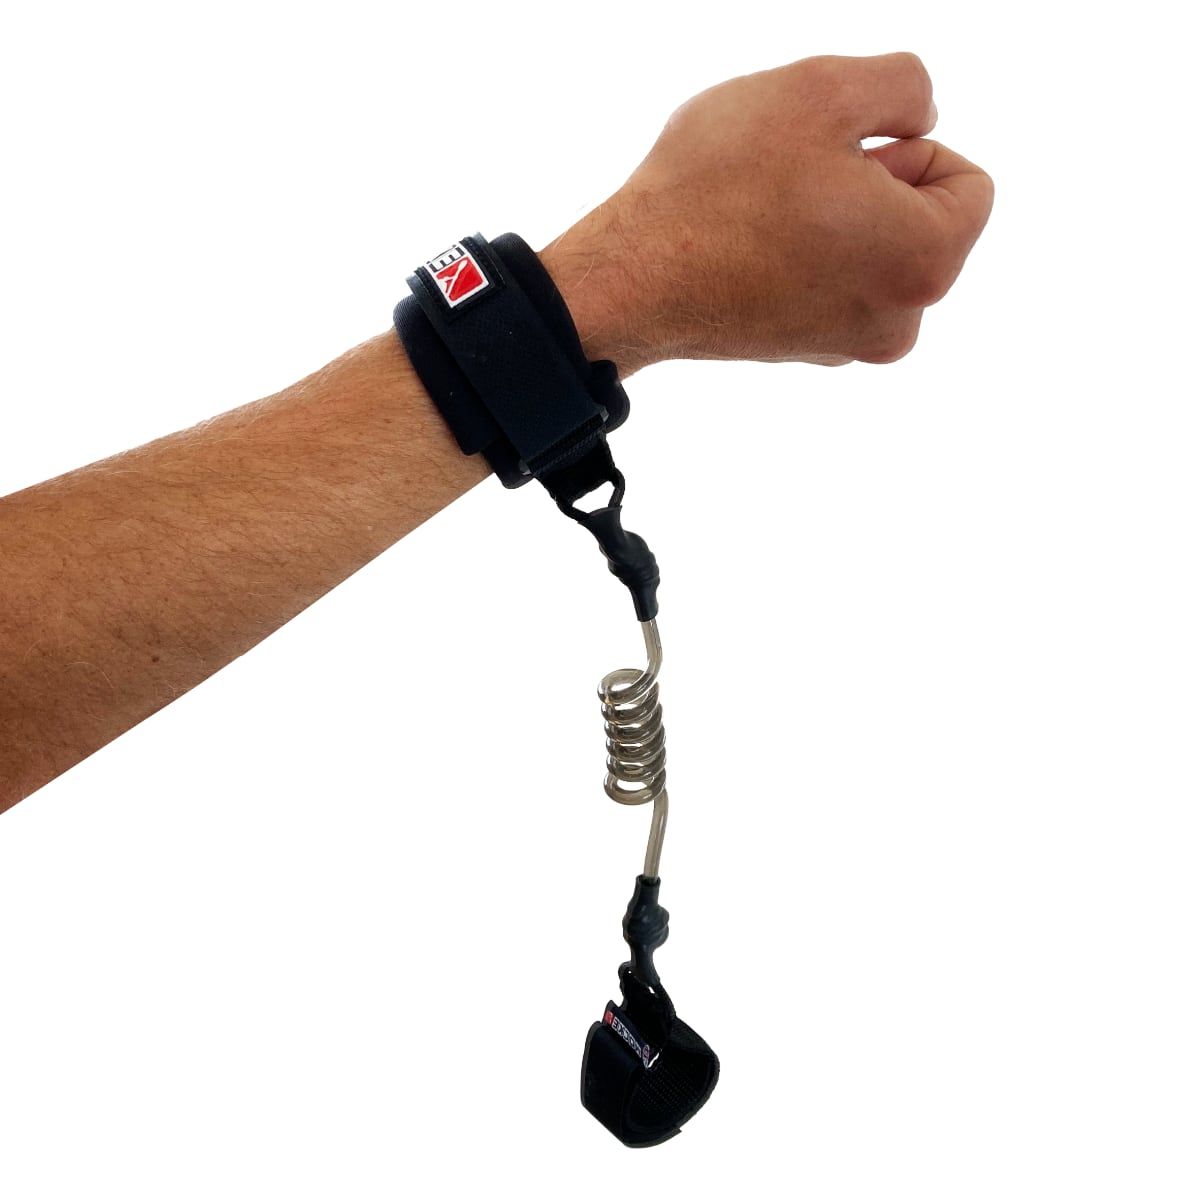 Mocke Wrist Paddle Leash attached to wrist